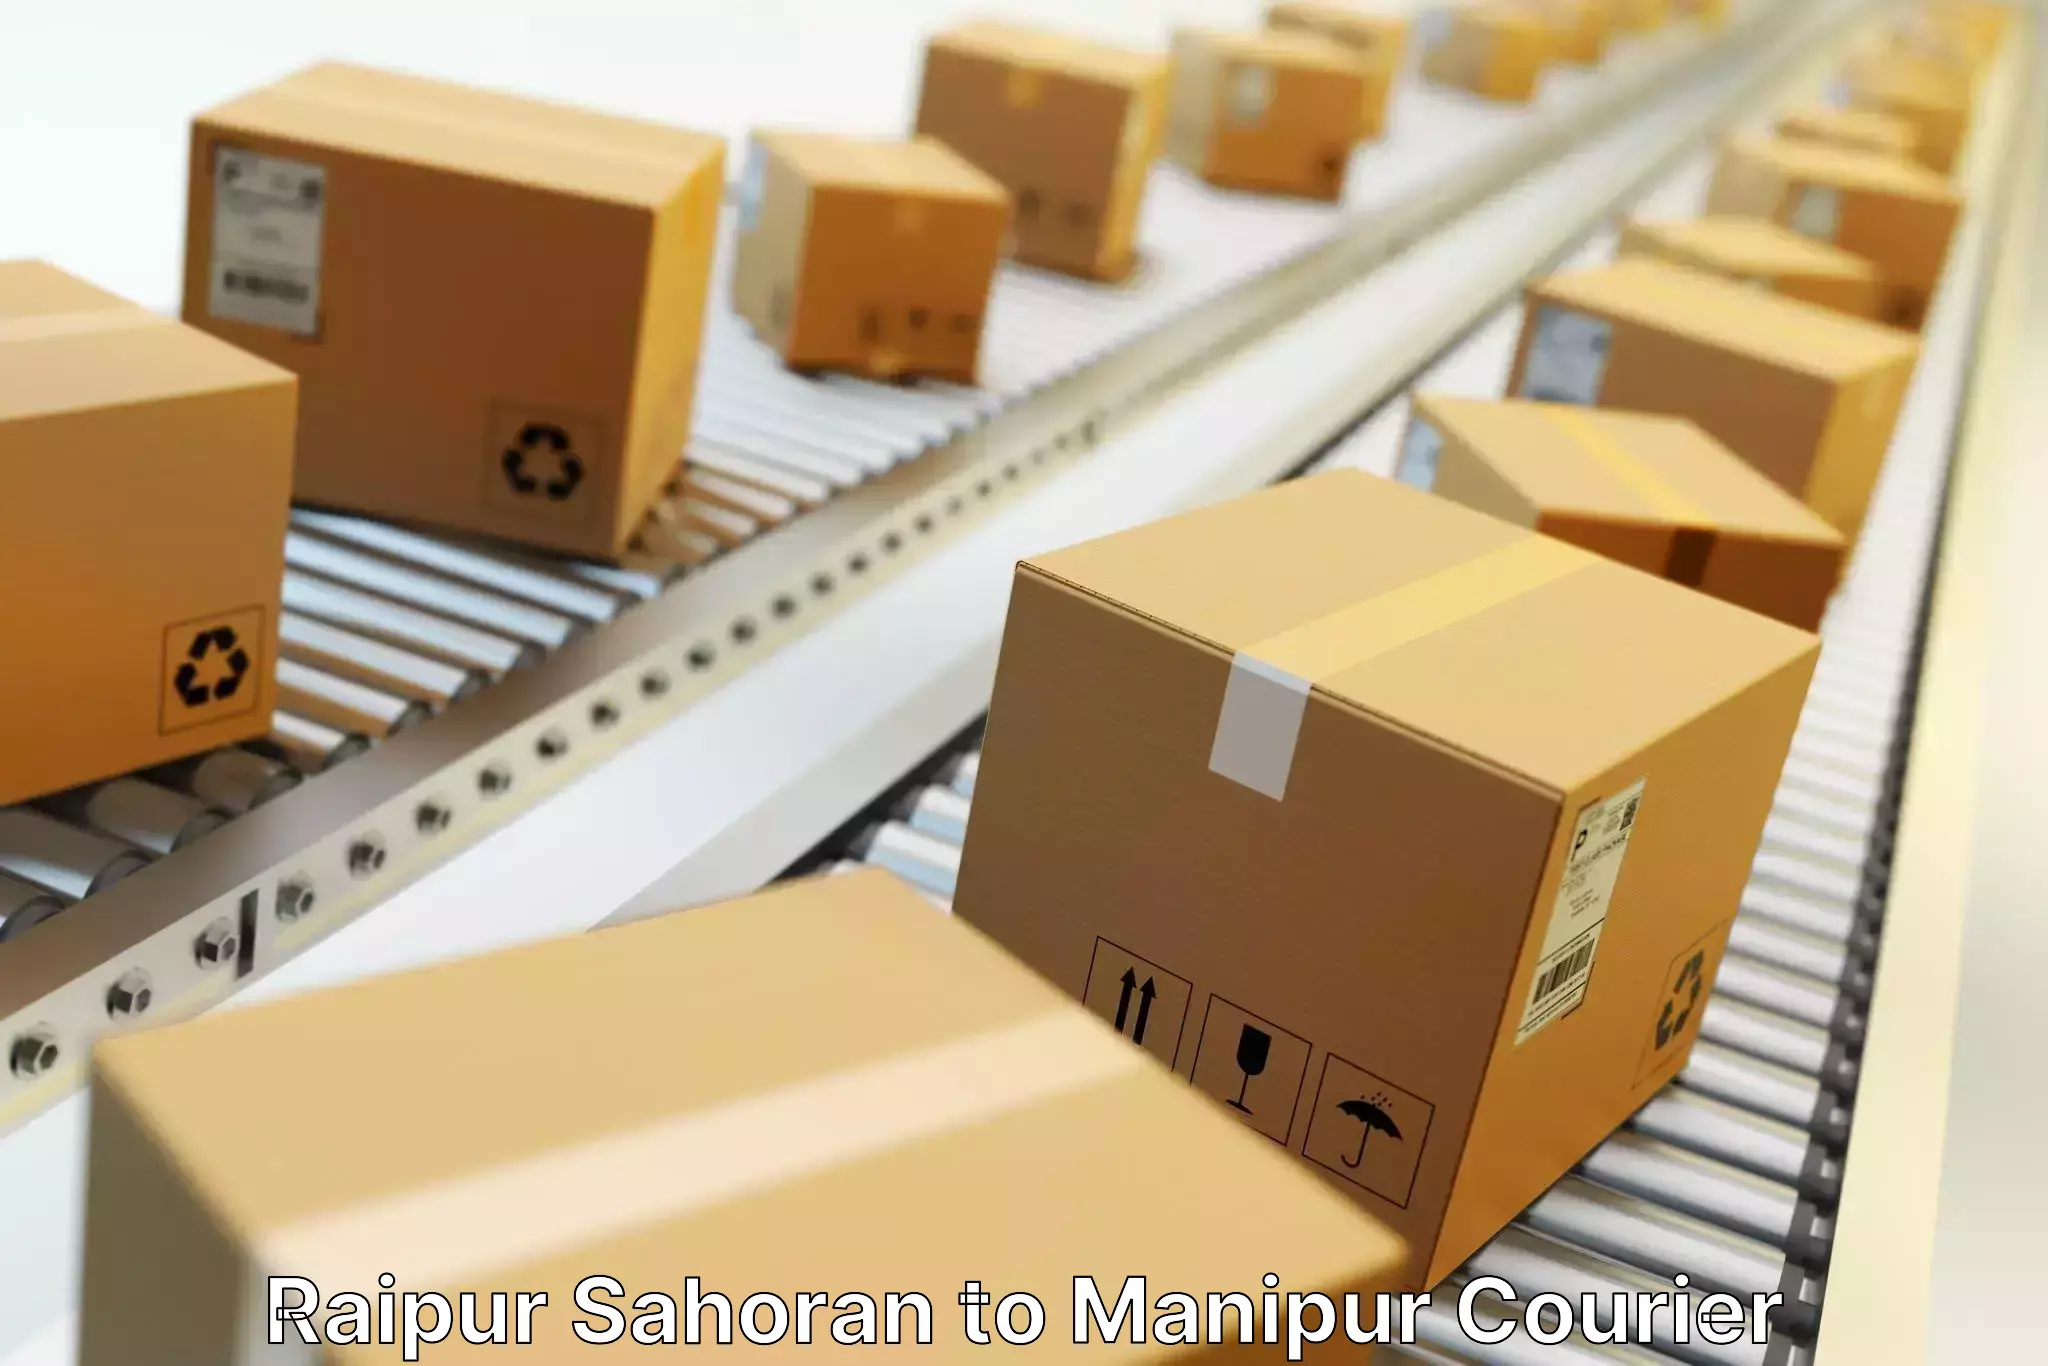 Courier service partnerships Raipur Sahoran to Manipur